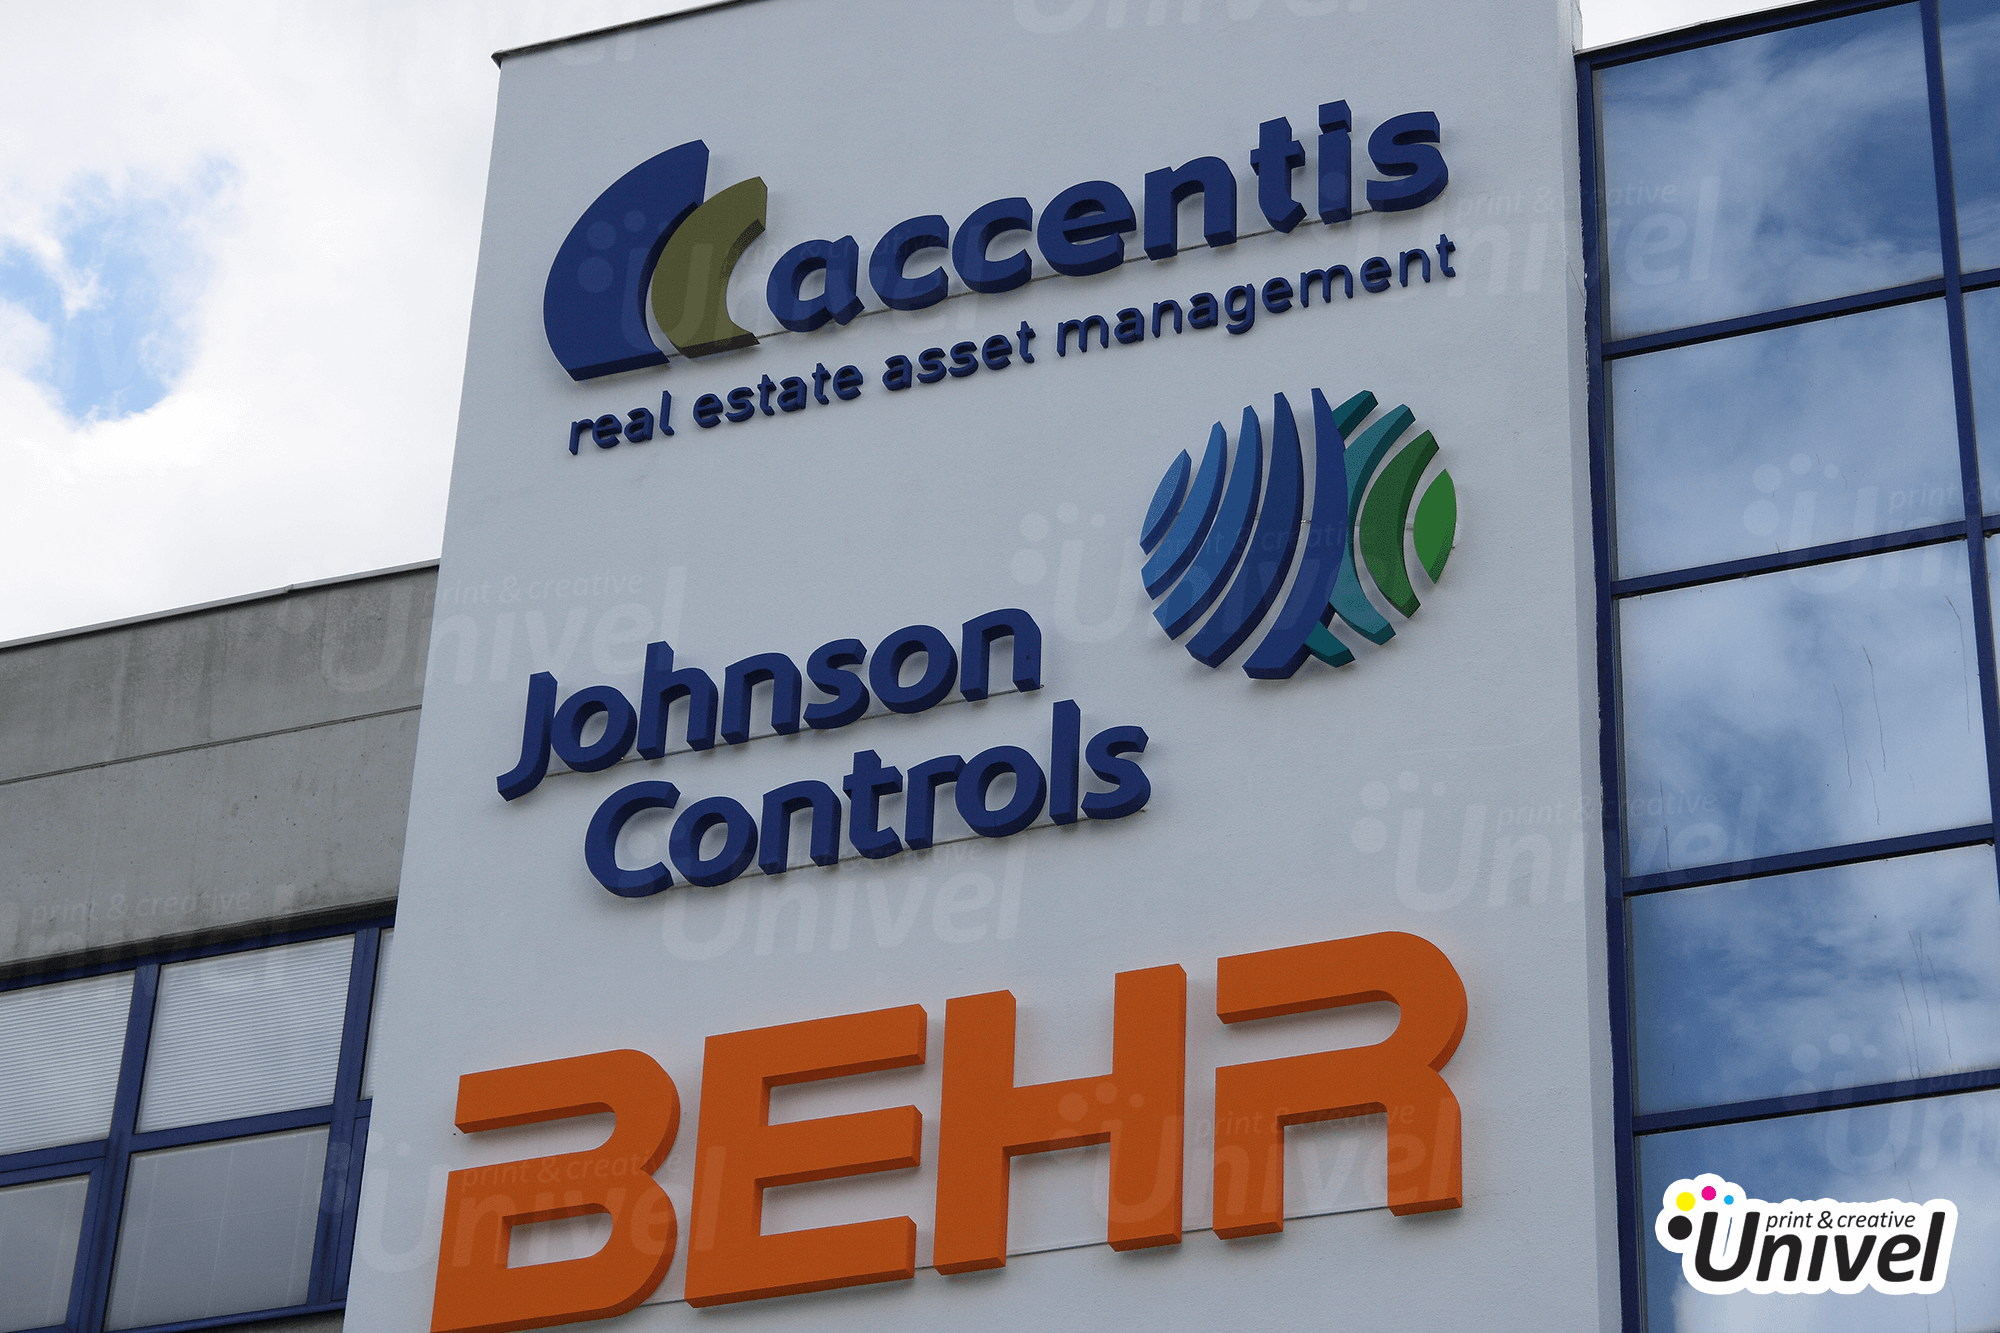 Univel 2012 - Johnson Controls Accentis Behr Svetelná reklama na budove detail